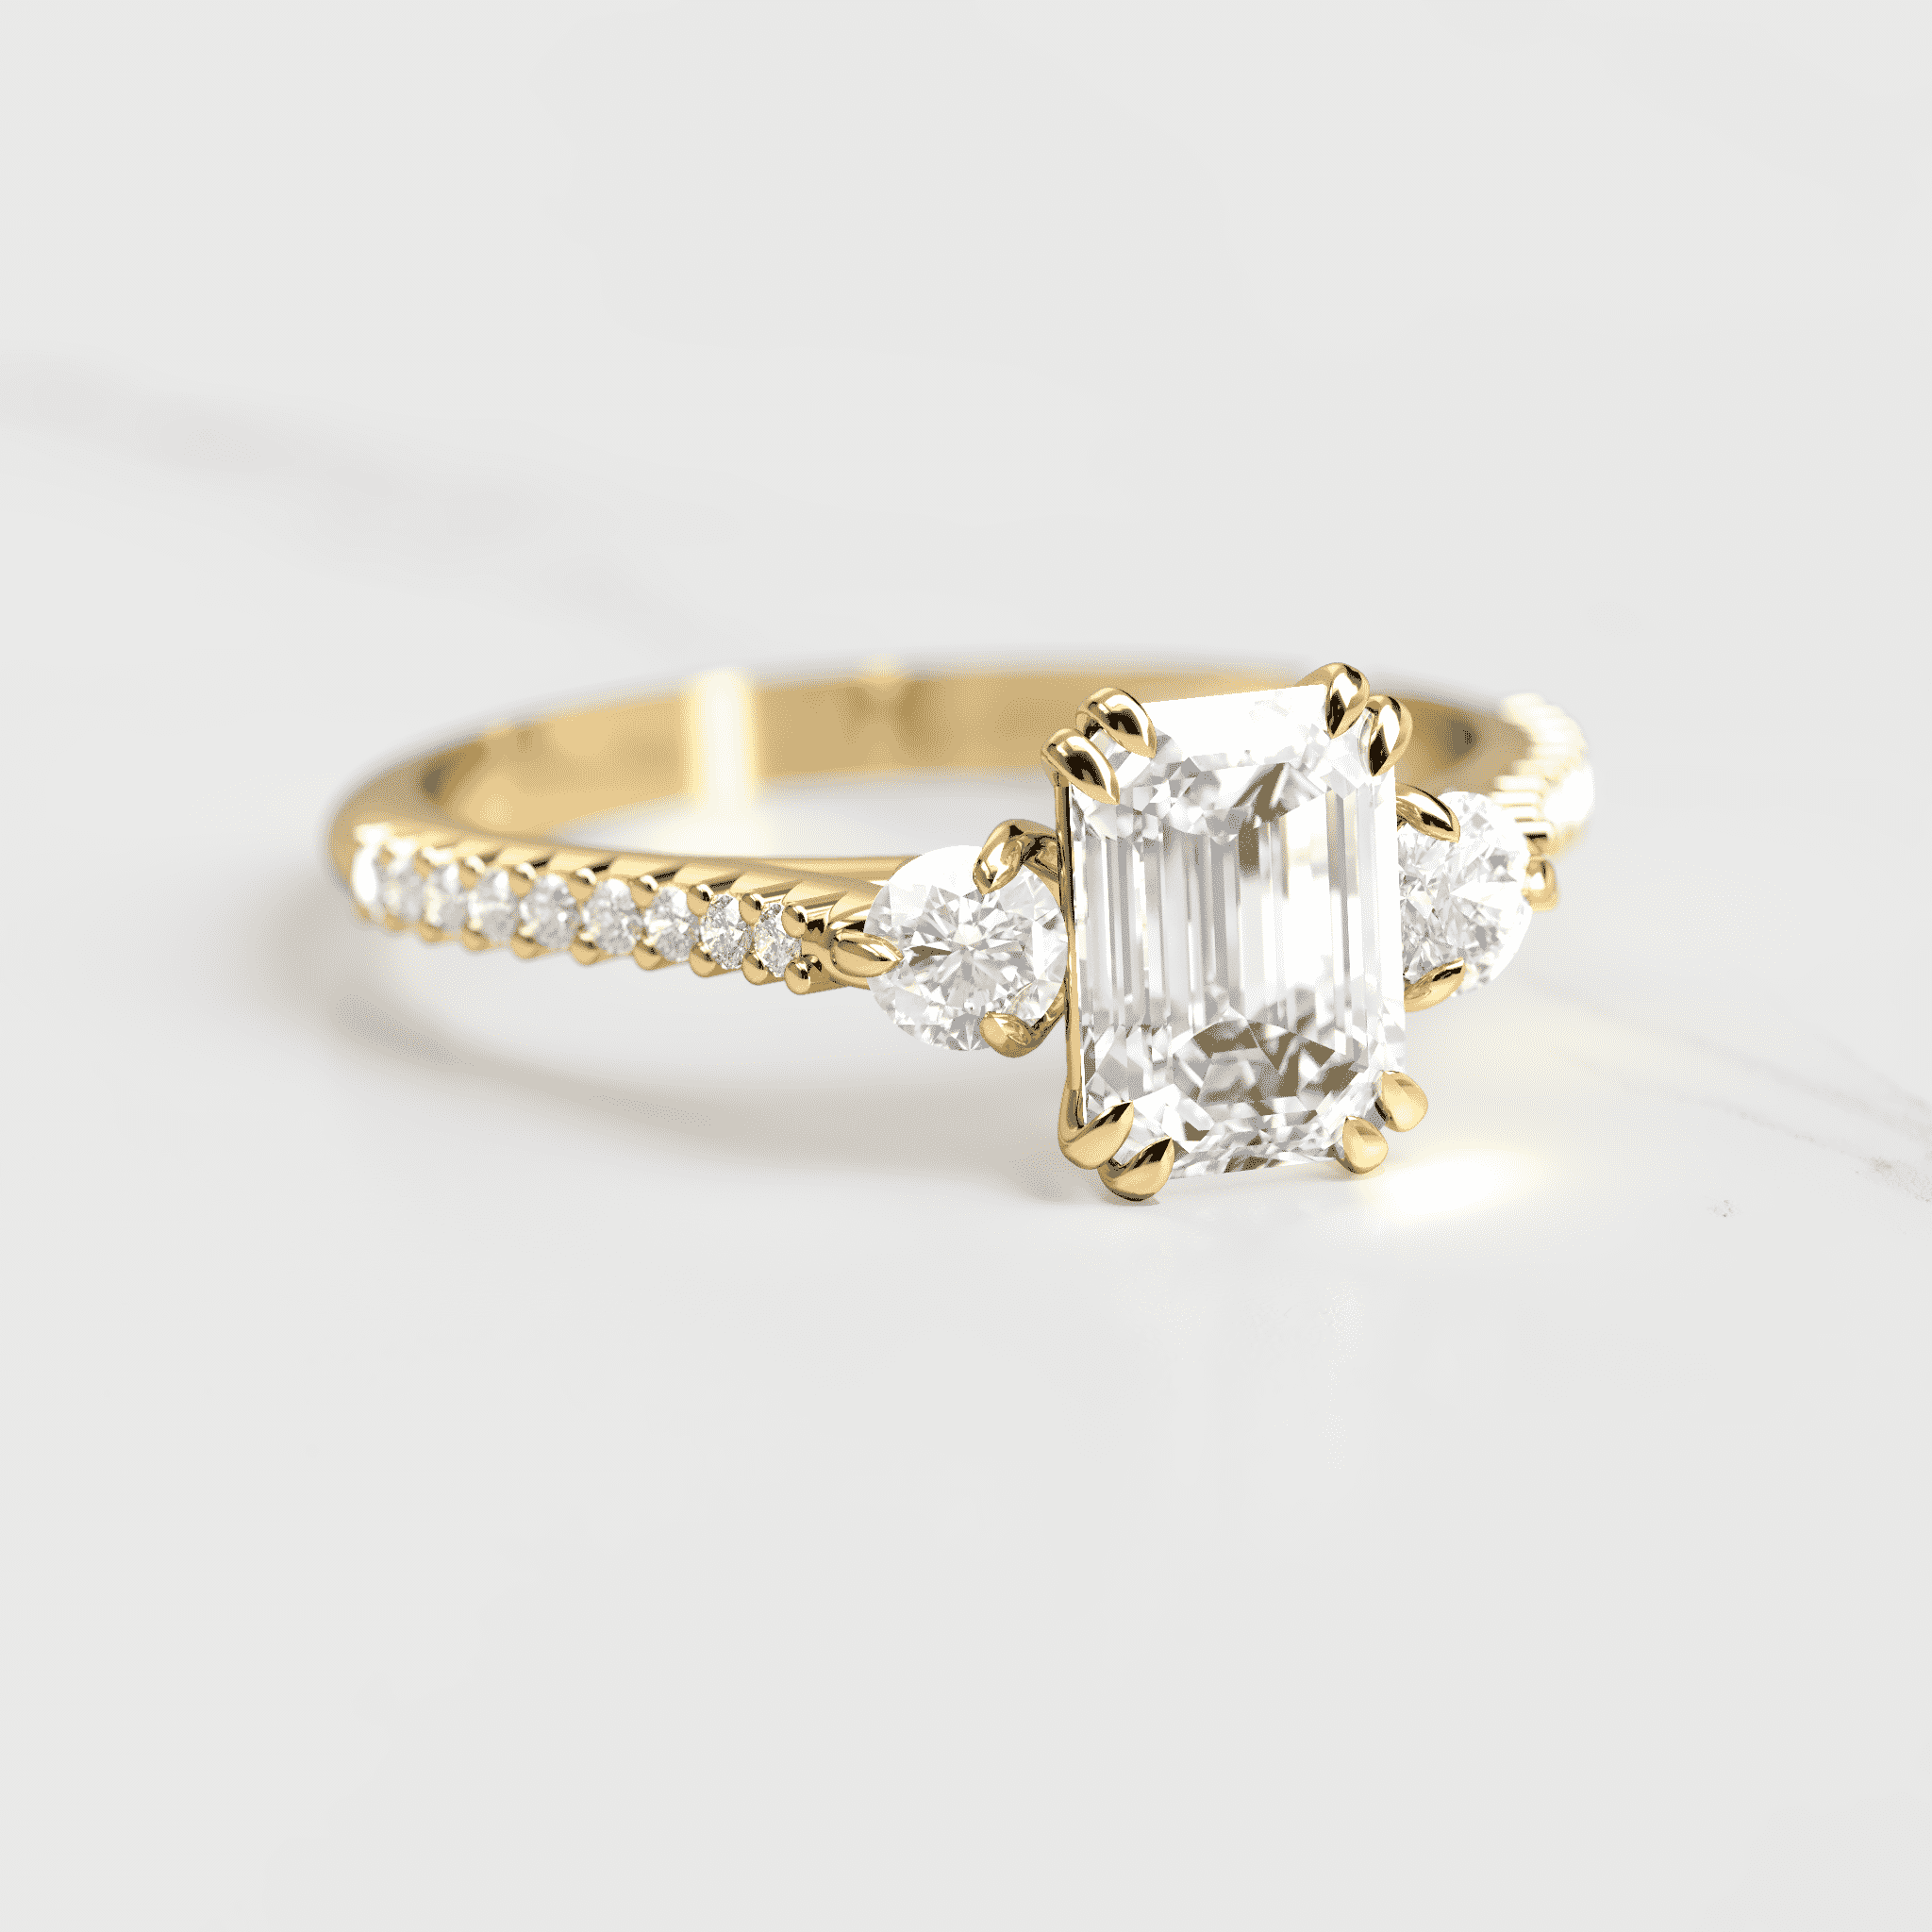 EMERALD HALF PAVE DIAMOND RING WITH ACCENT STONES - platinum / 1ct / lab diamond